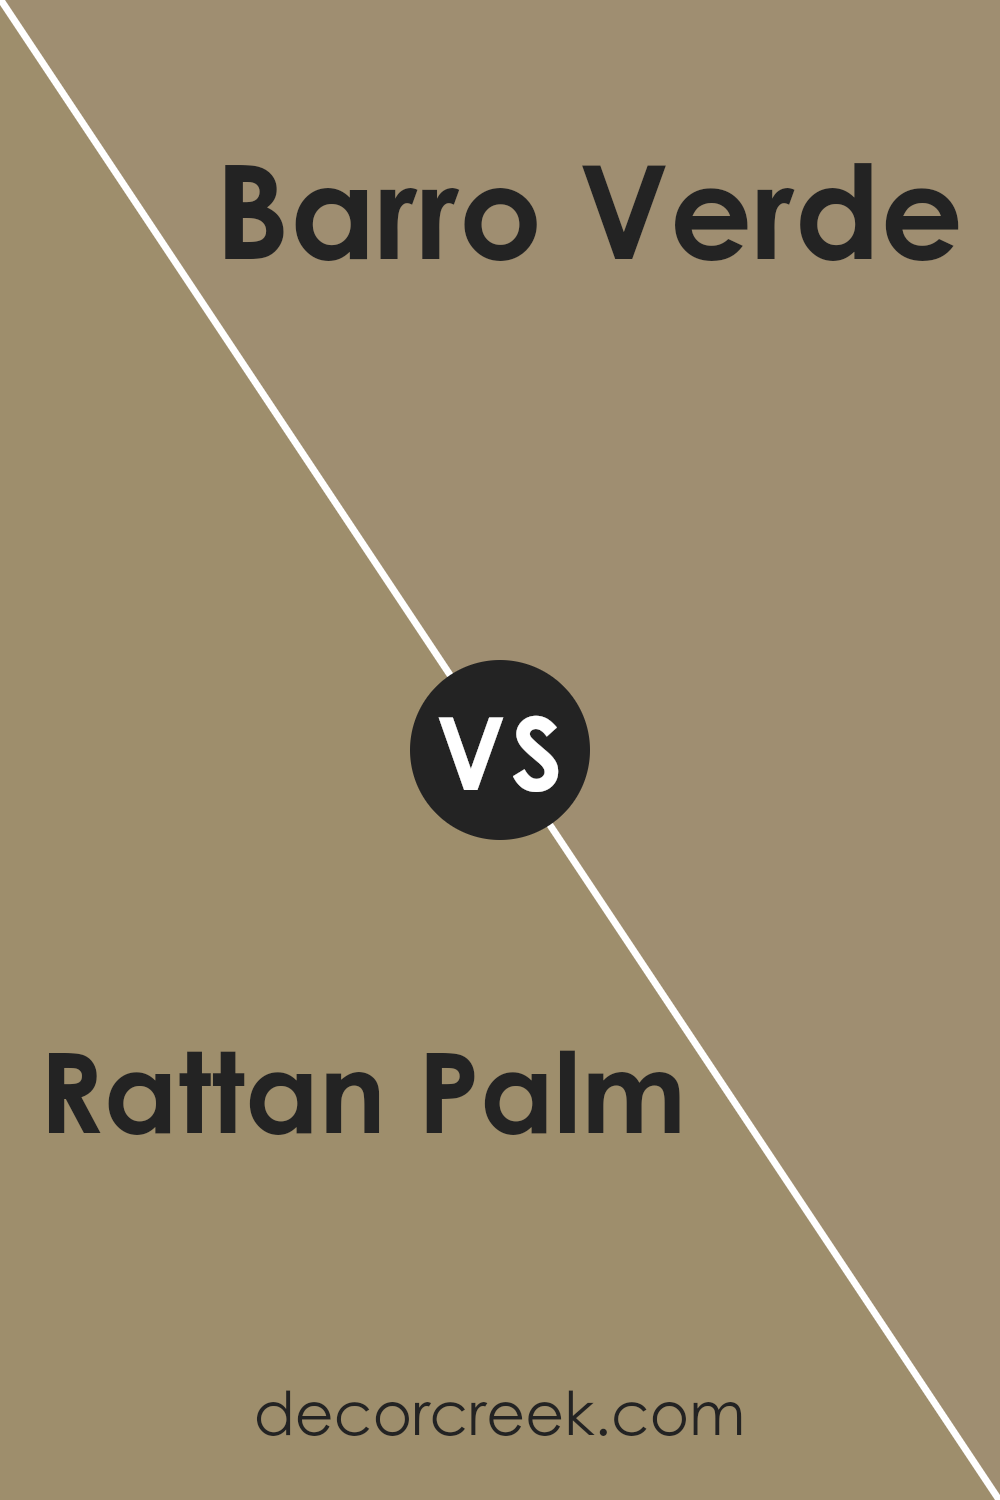 rattan_palm_sw_9533_vs_barro_verde_sw_9123